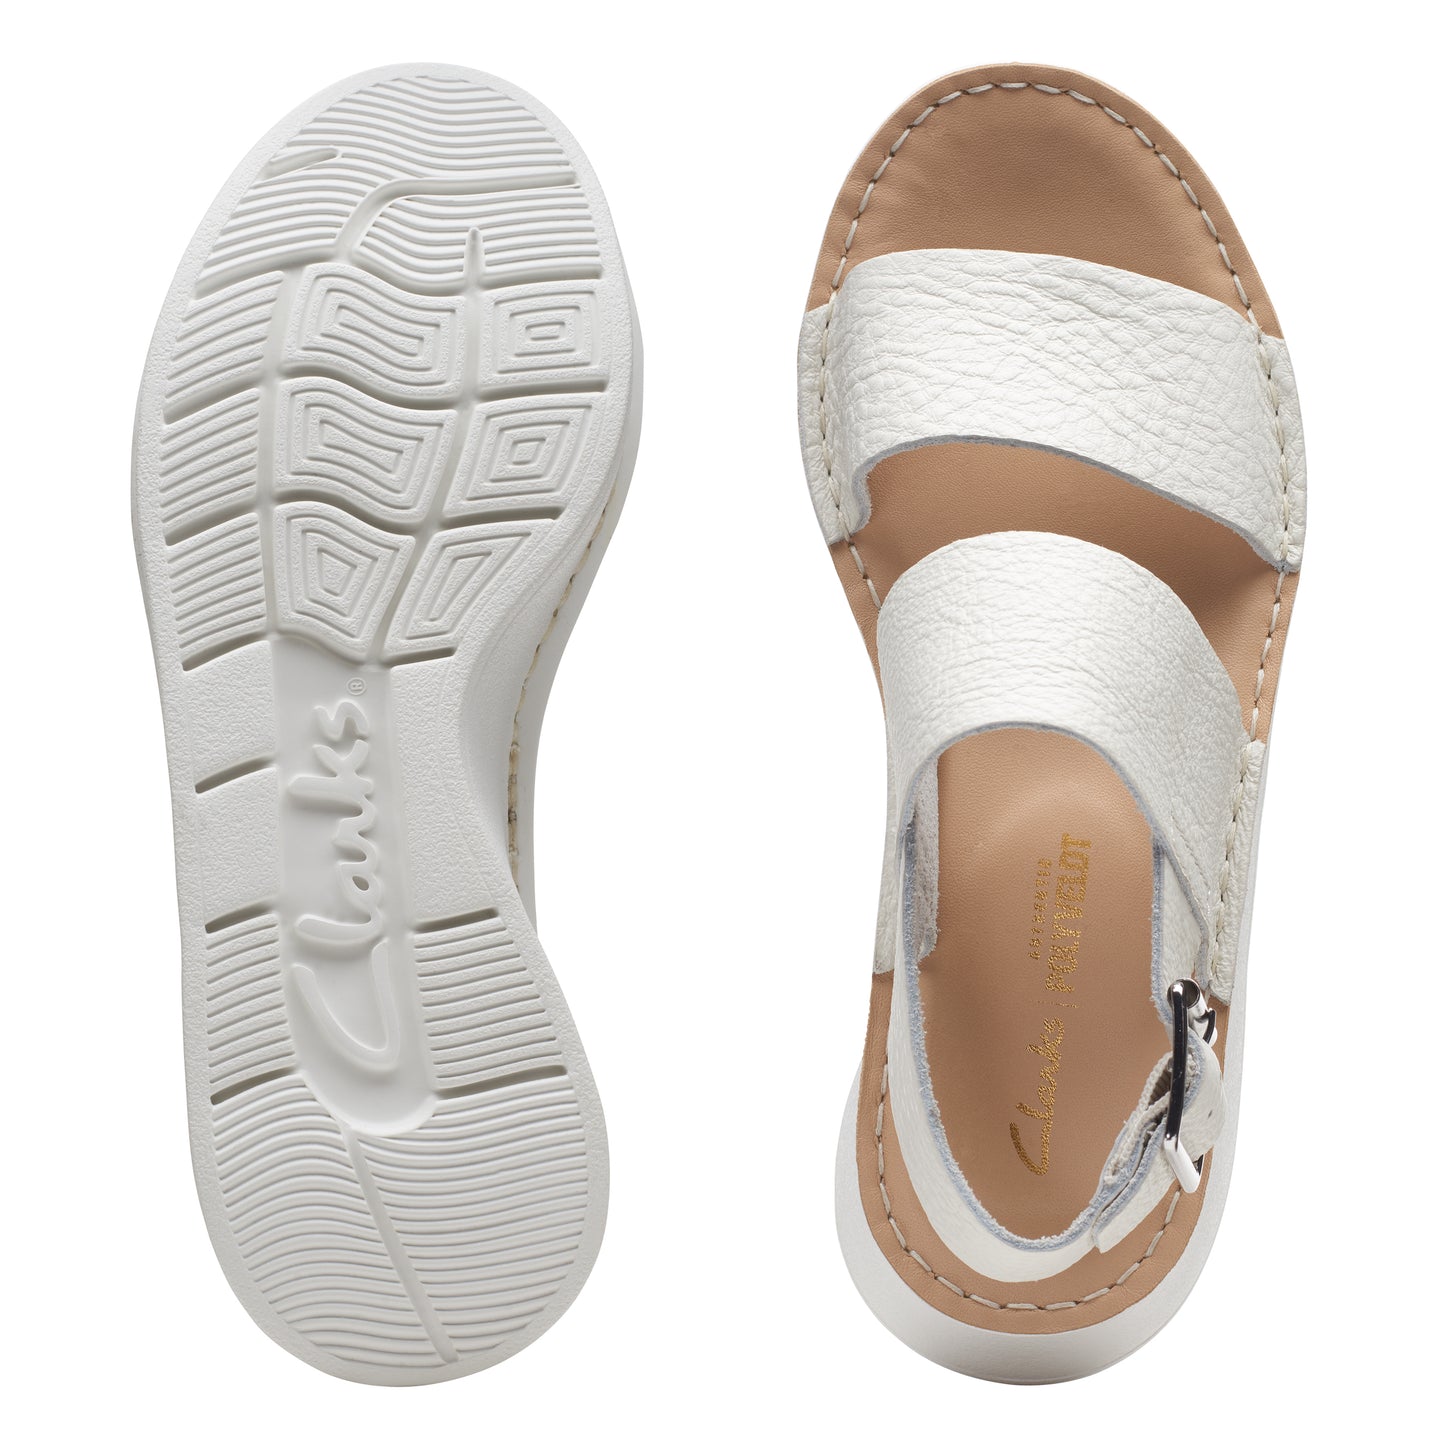 Zapato De Cuña De La Marca Clarks Para Mujer Modelo Velhill Strap Off White LeaEn Color Blanco